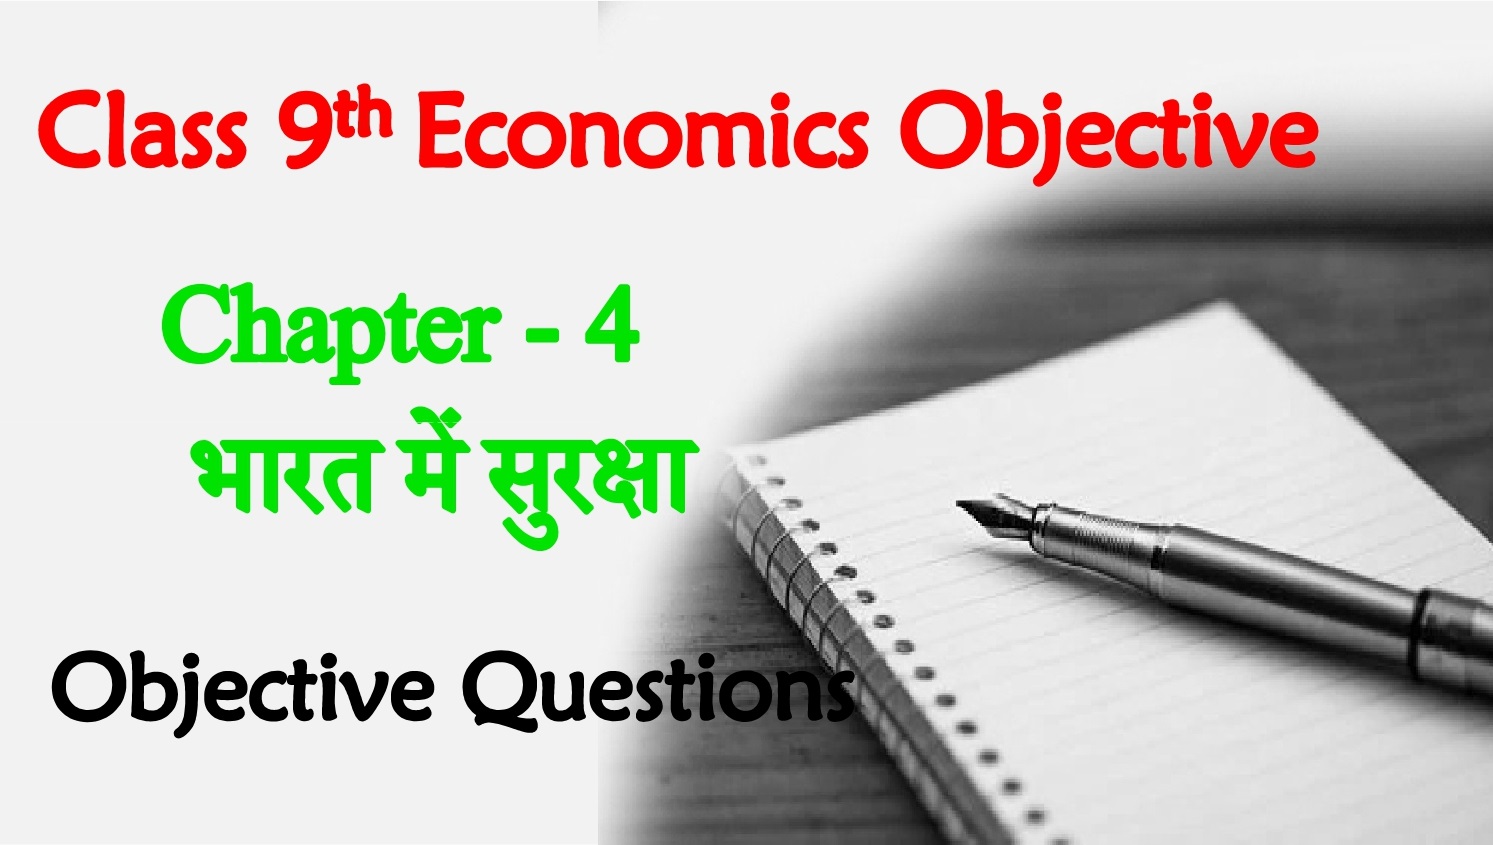 Bharat Me Kahd Surkhsa Class 9th Objective Questions